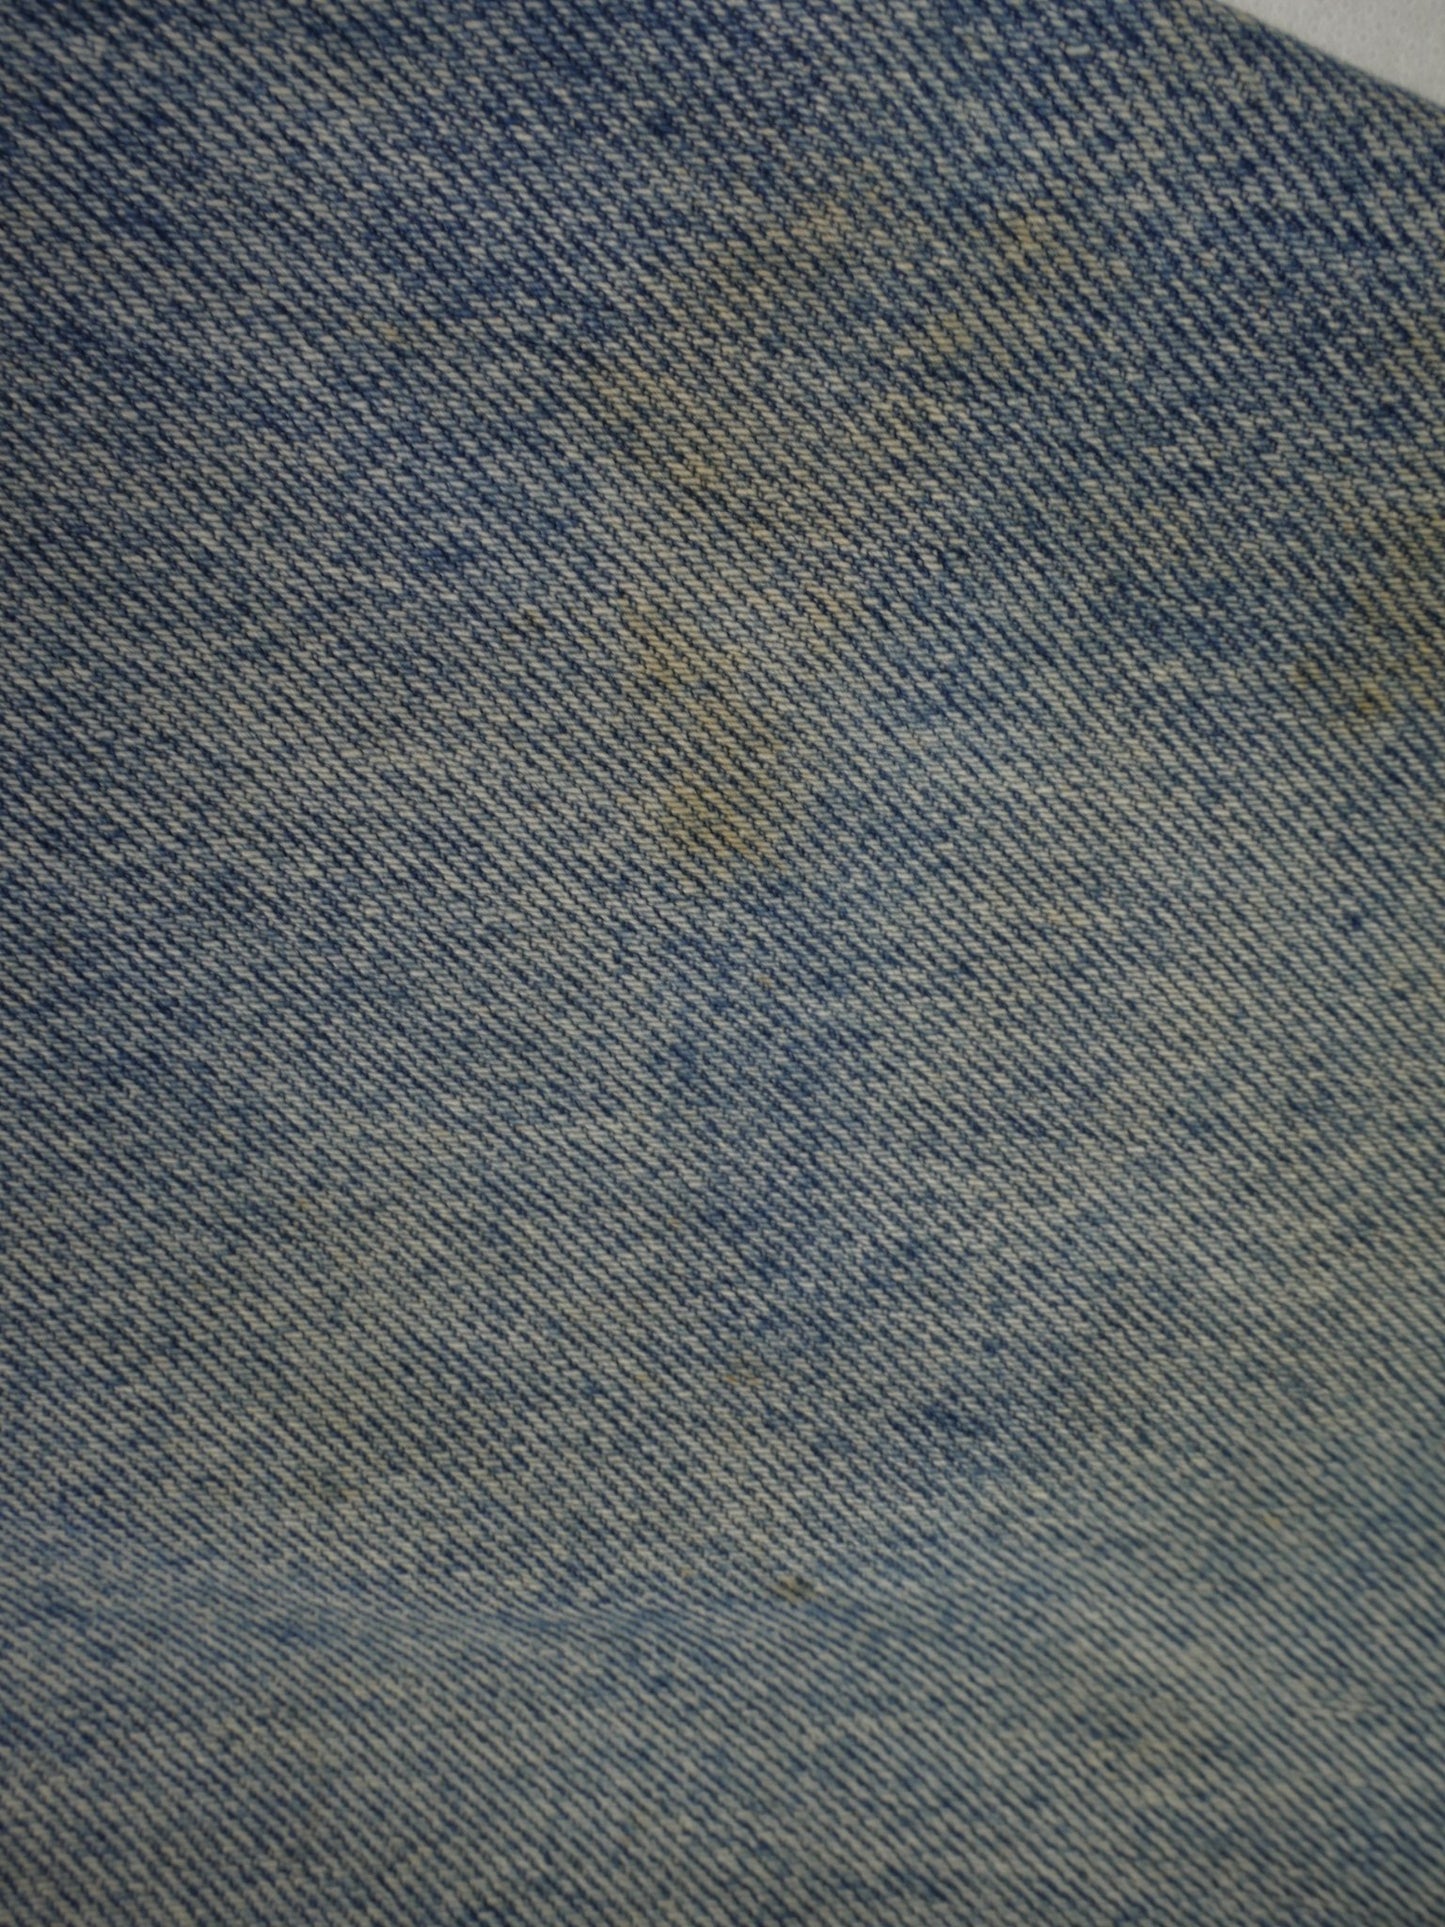 Levis embroidered Patch blue Denim Vintage Jacket - Peeces